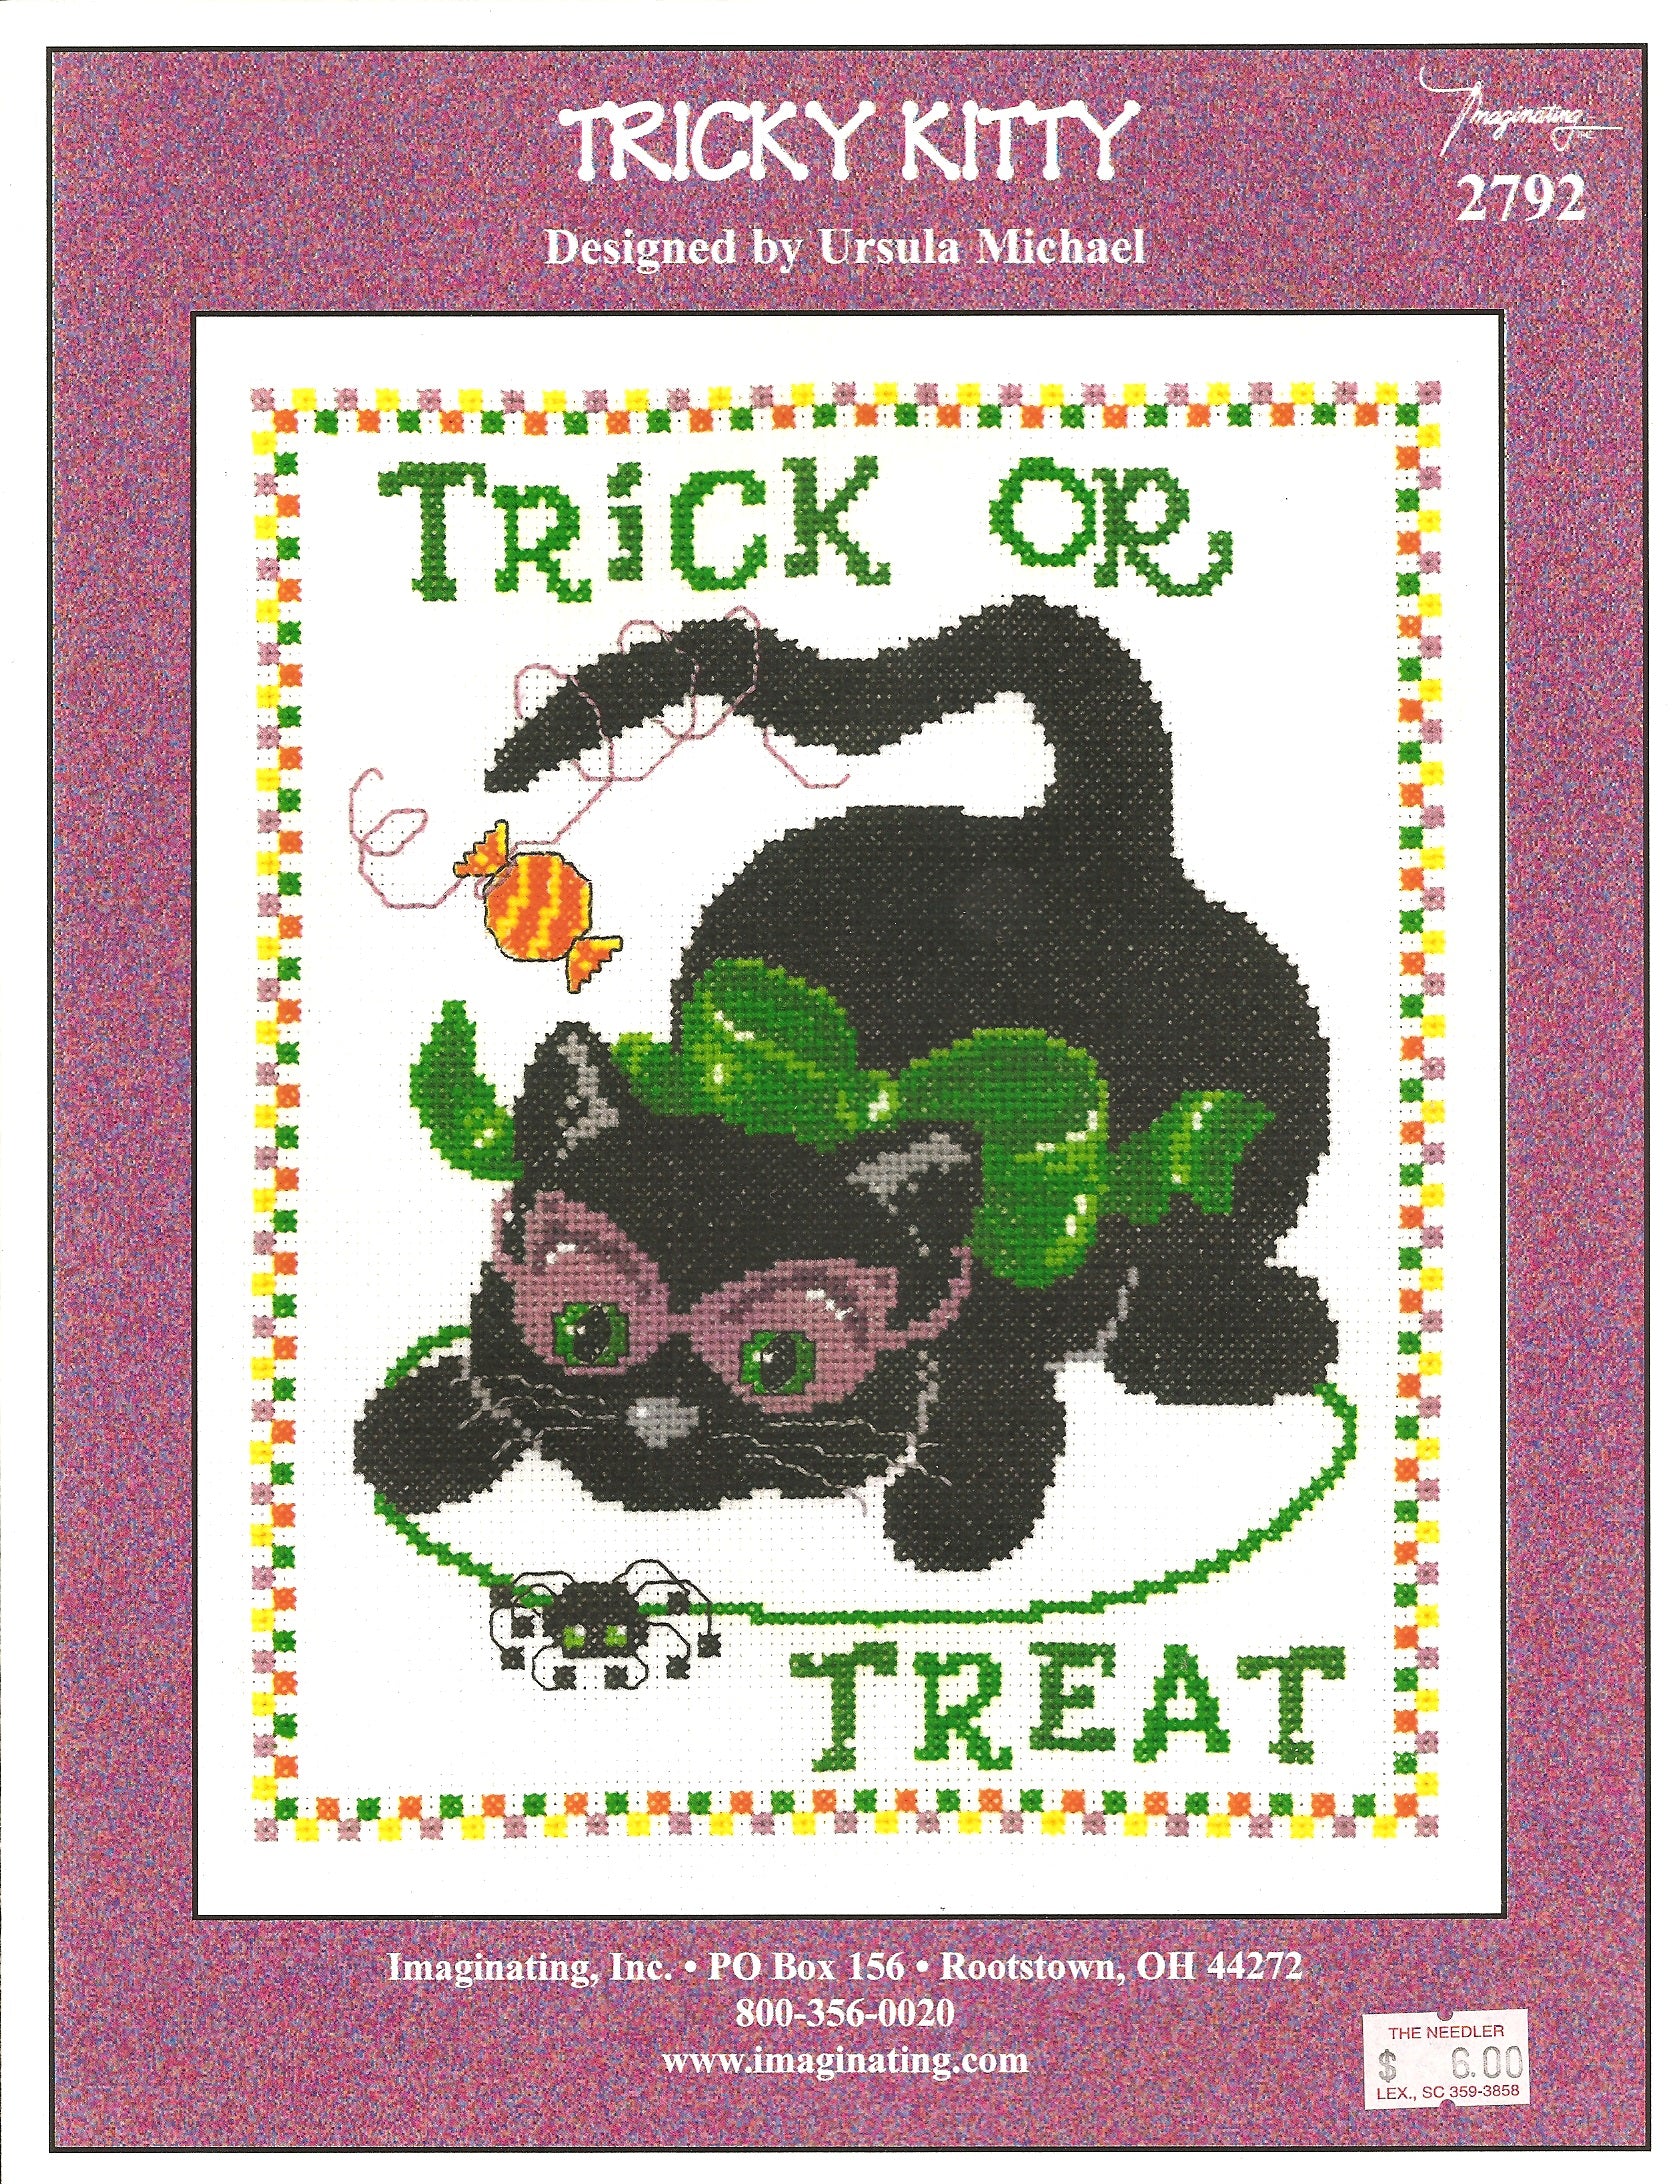 Imaginating Tricky Kitty 2792 Halloween cross stitch pattern